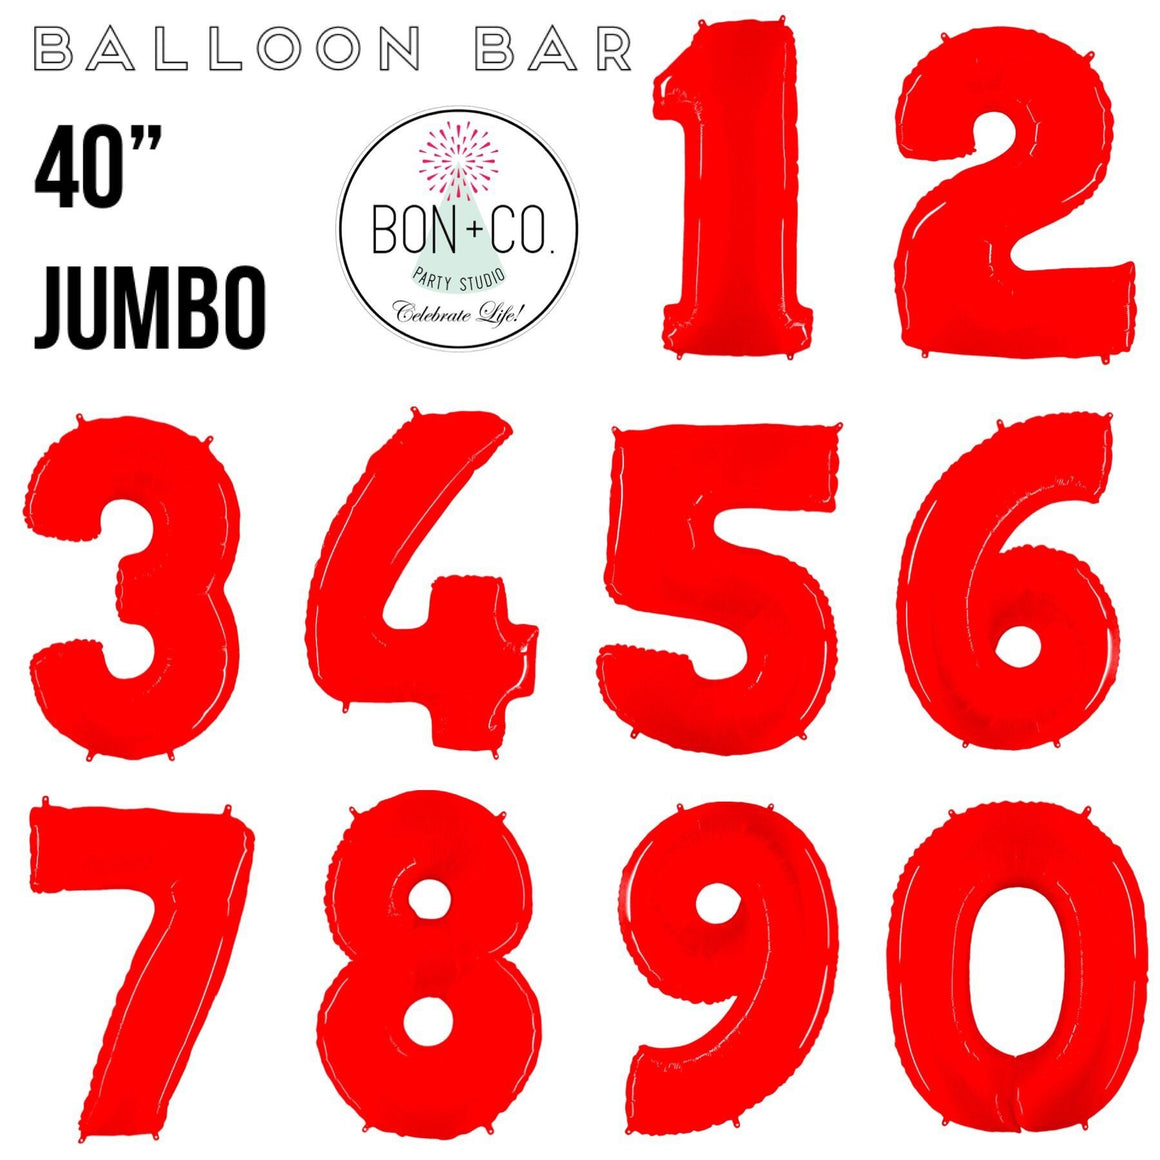 BALLOON BAR - 40" JUMBO NUMBER BRIGHT RED, Balloons, bargain balloons - Bon + Co. Party Studio